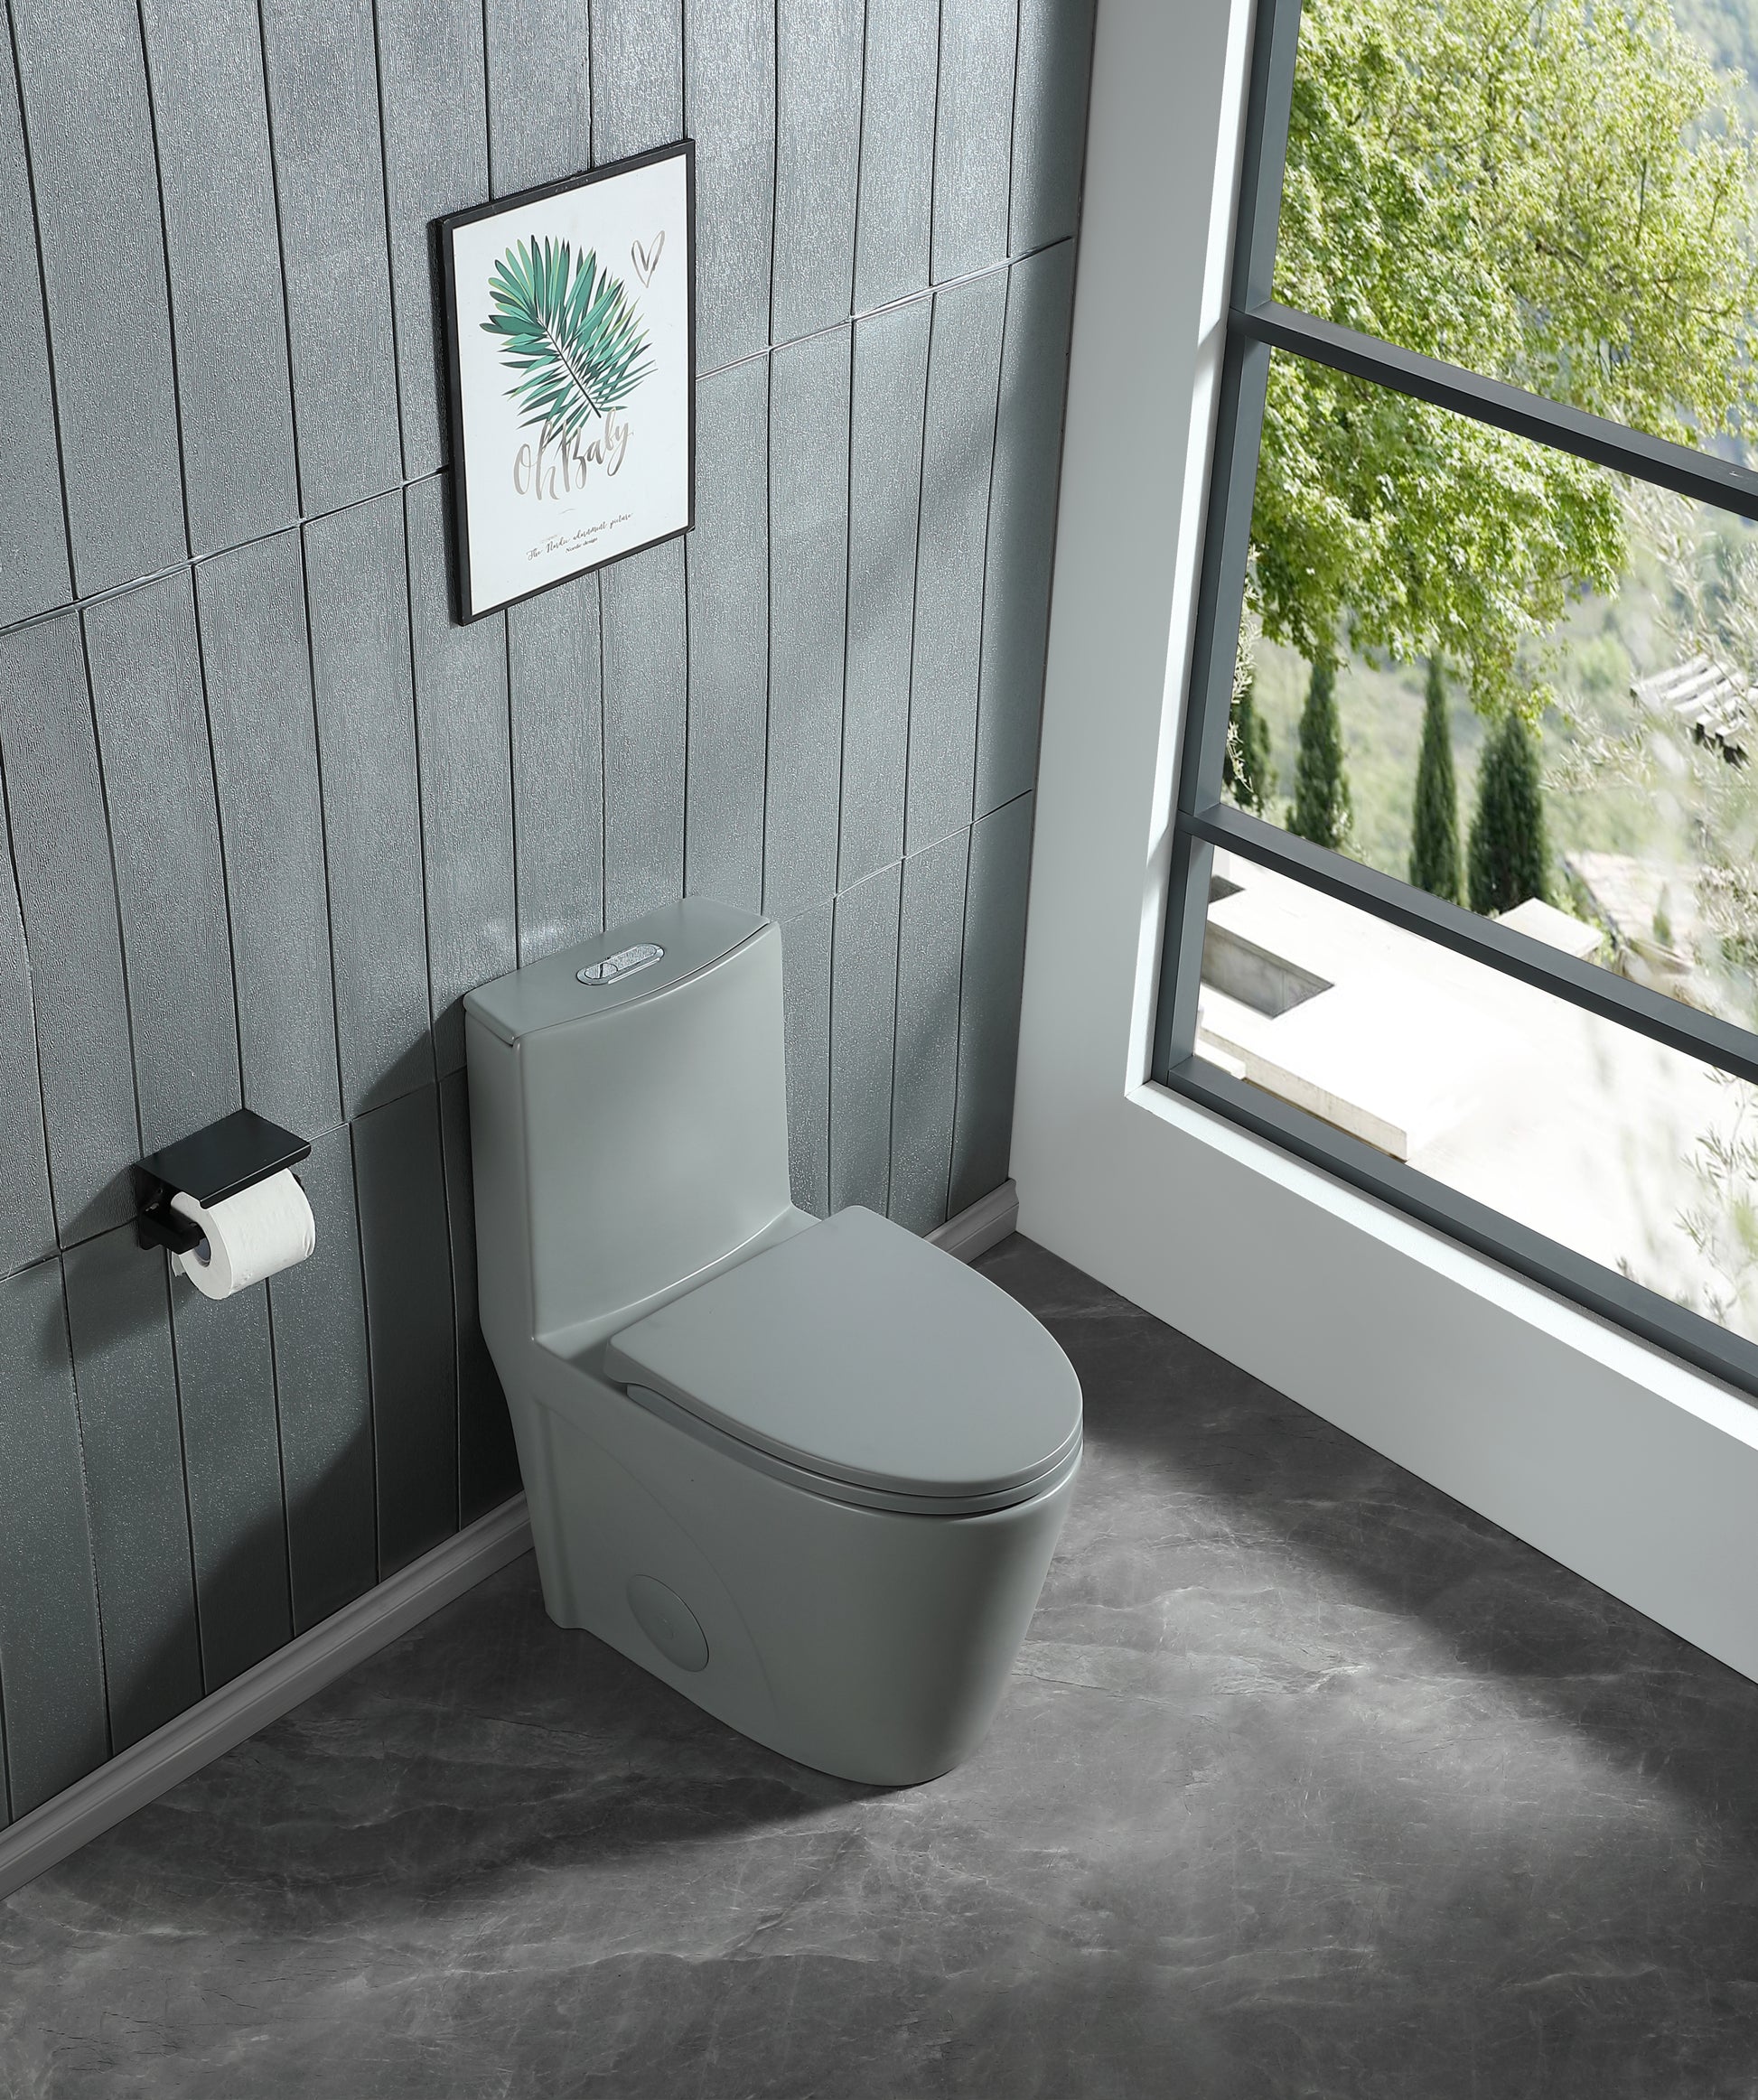 black toilet seat cover 23T01 LGP01 light gray-acrylic